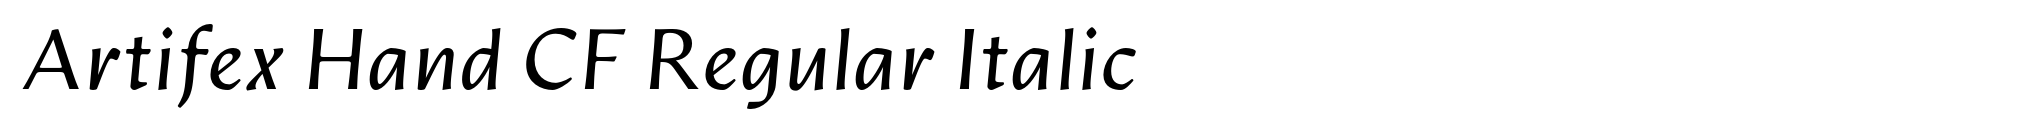 Artifex Hand CF Regular Italic image